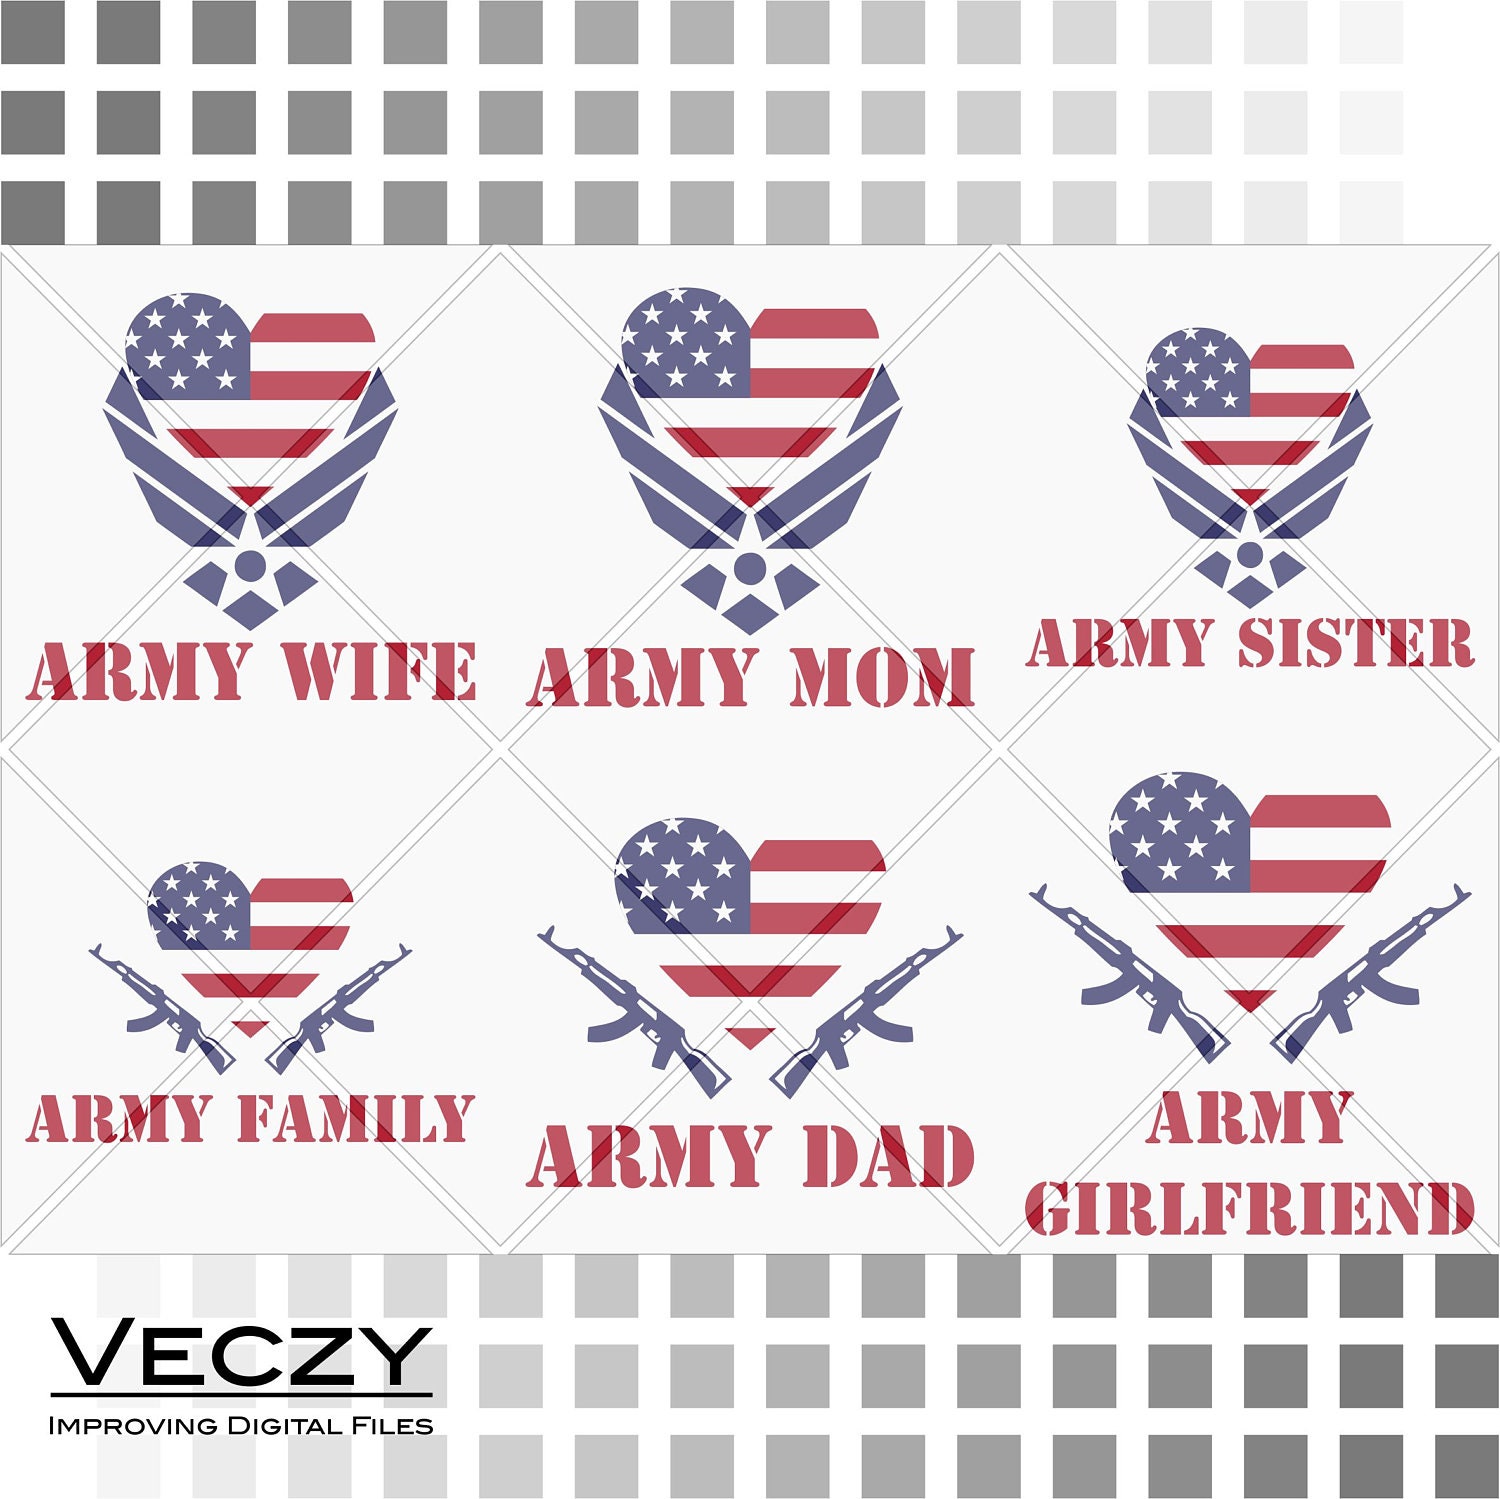 Download Army SVG army dad army mom rmy girlfriend army family